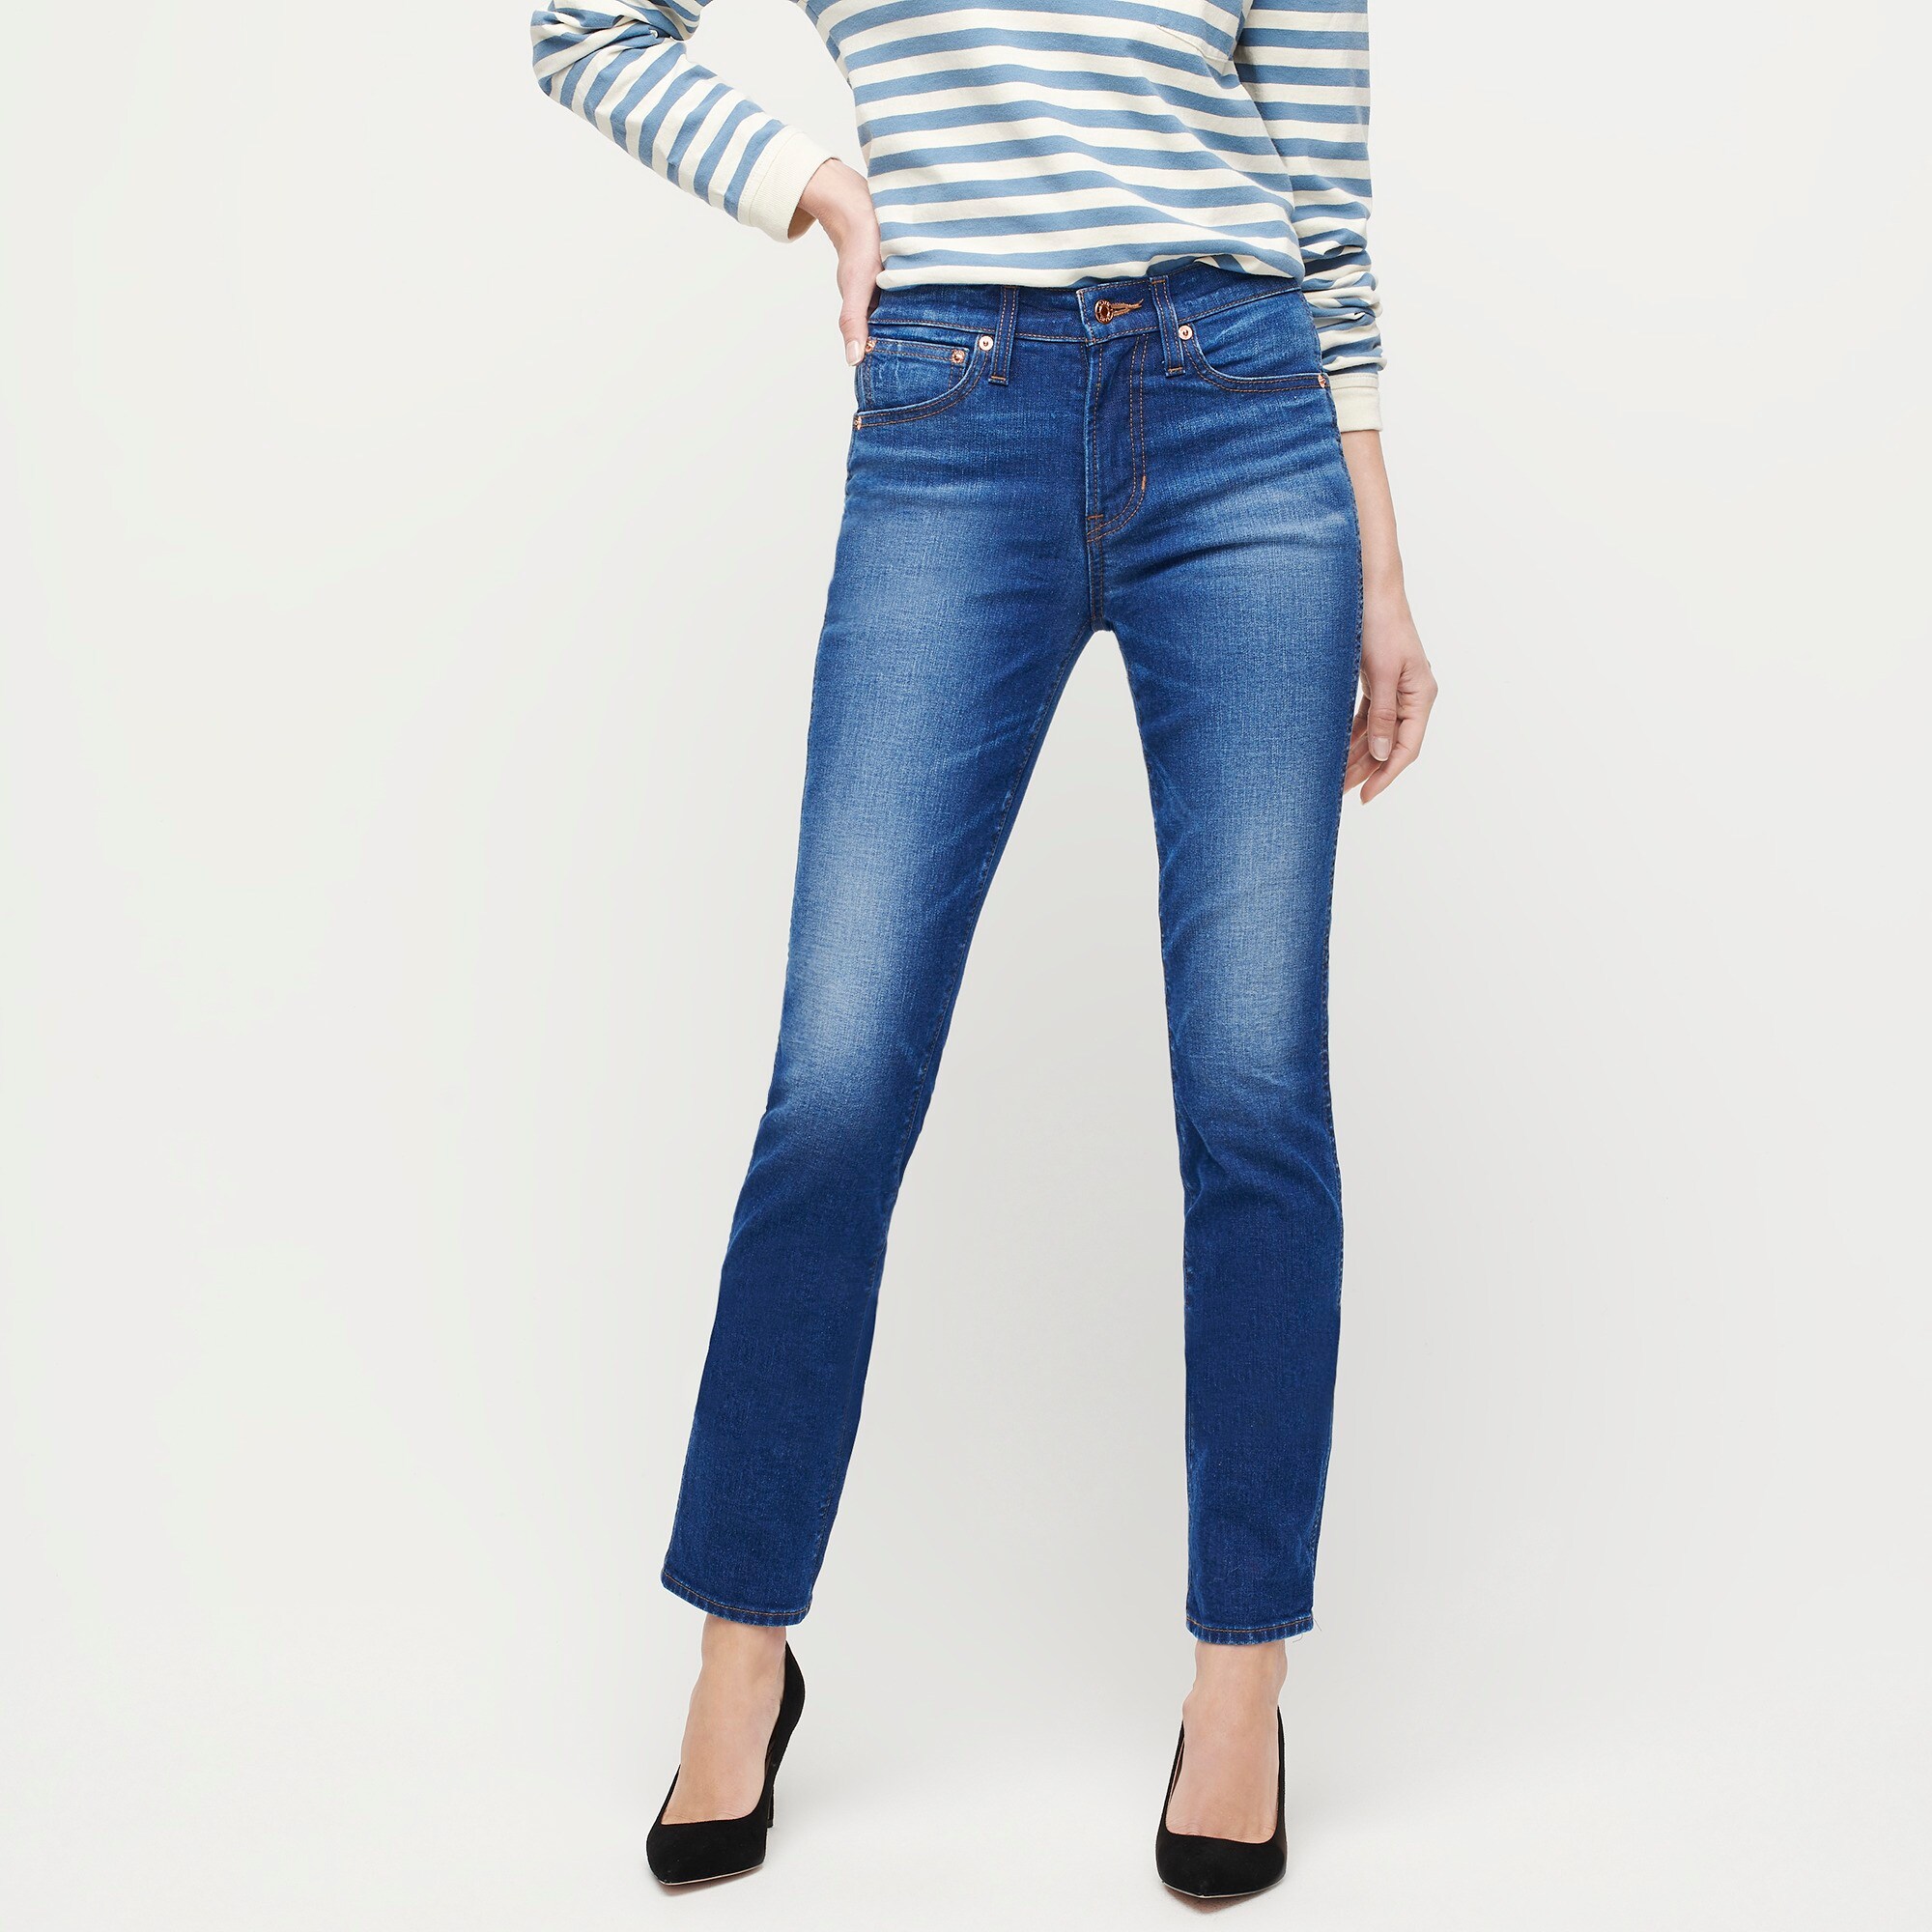 aerin frame jeans